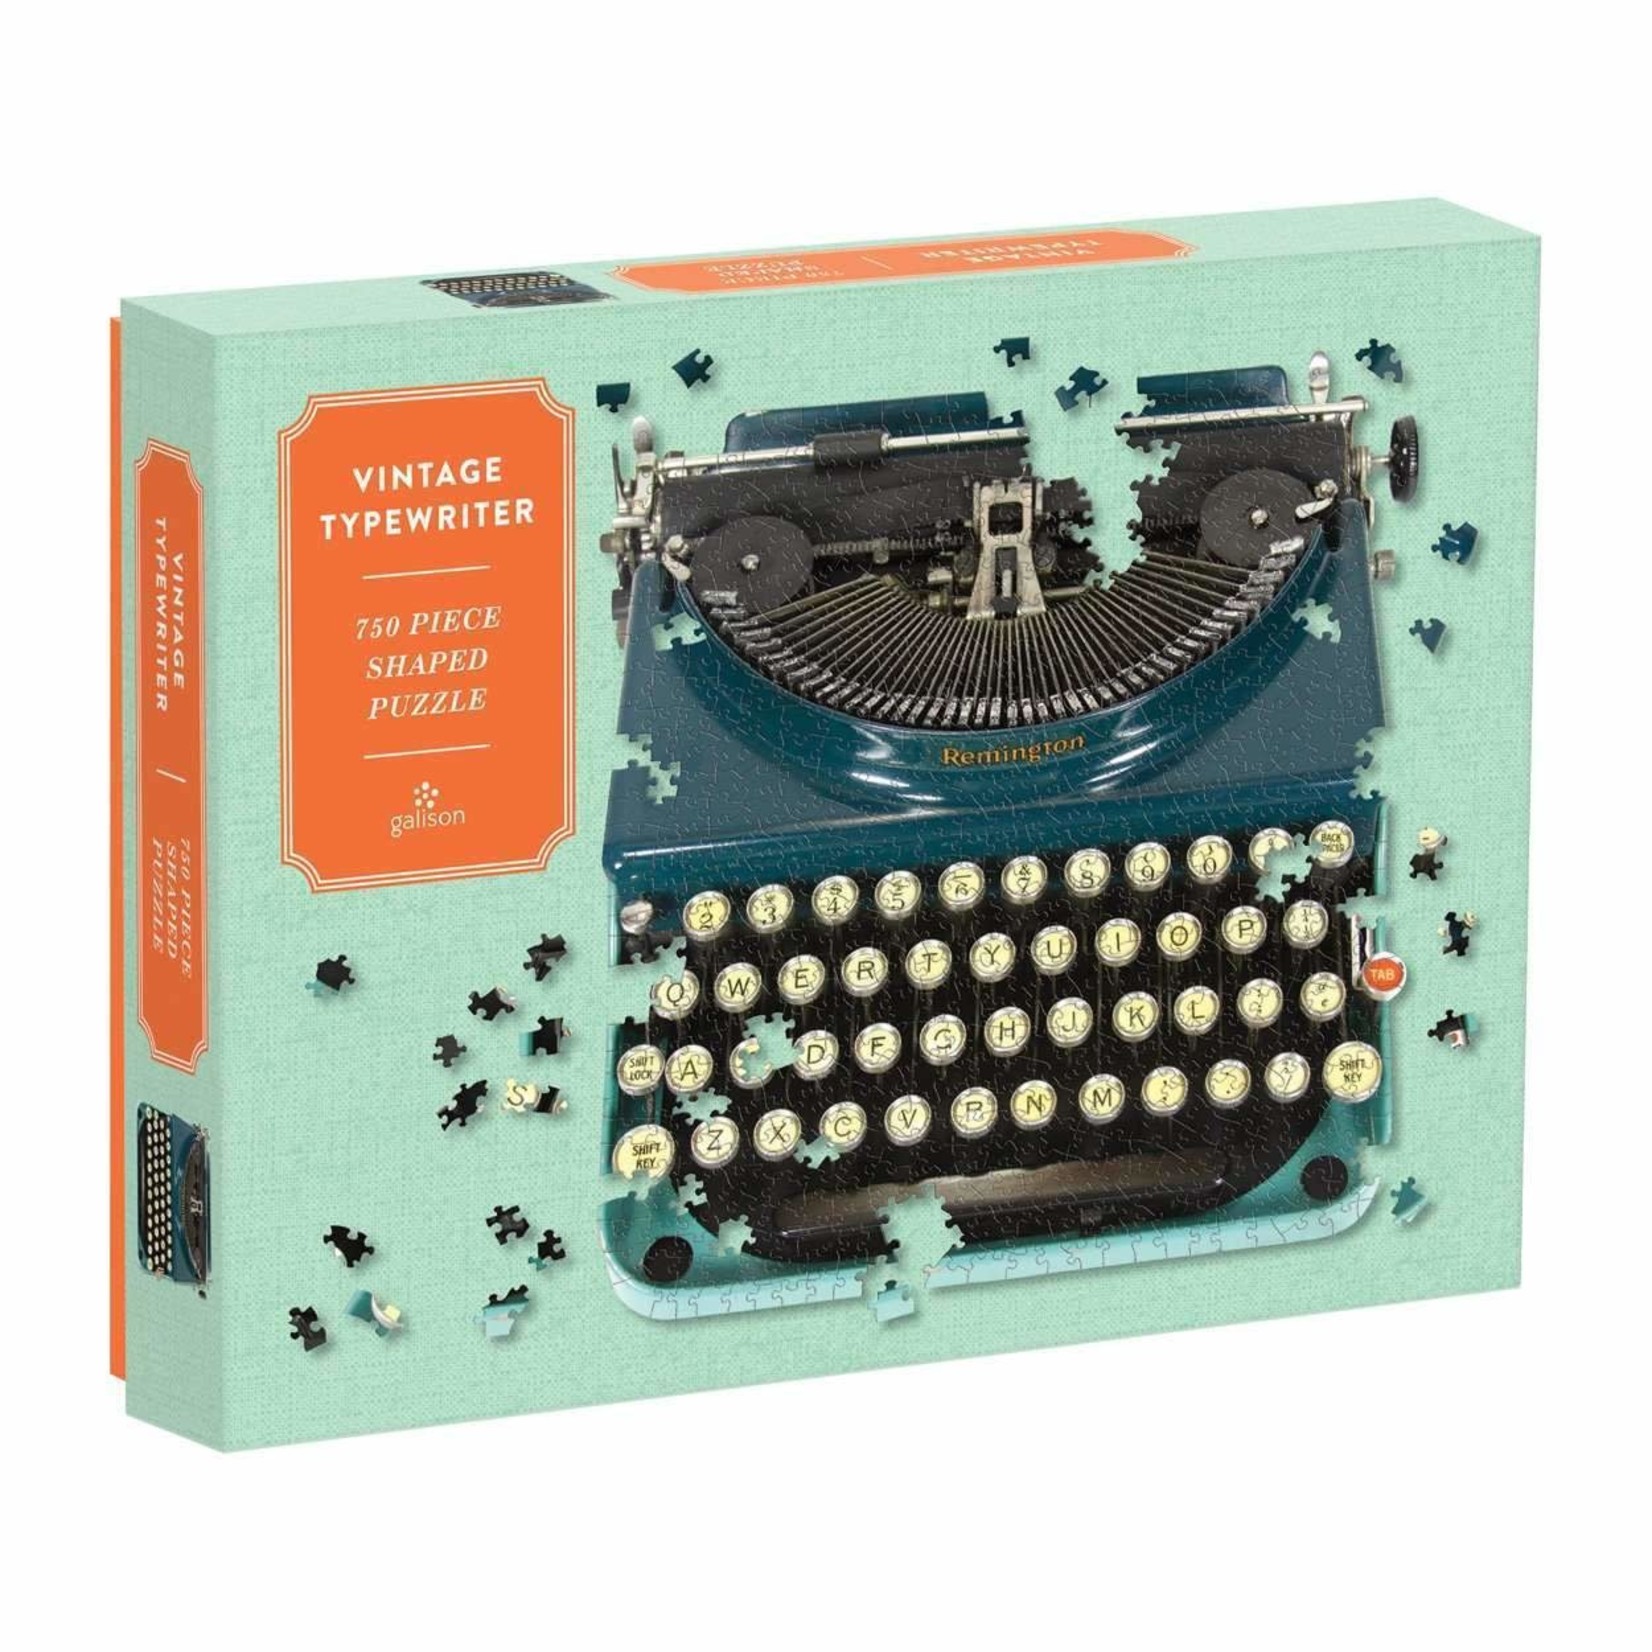 galison Shaped Puzzle Vintage Typewriter 750 Pieces